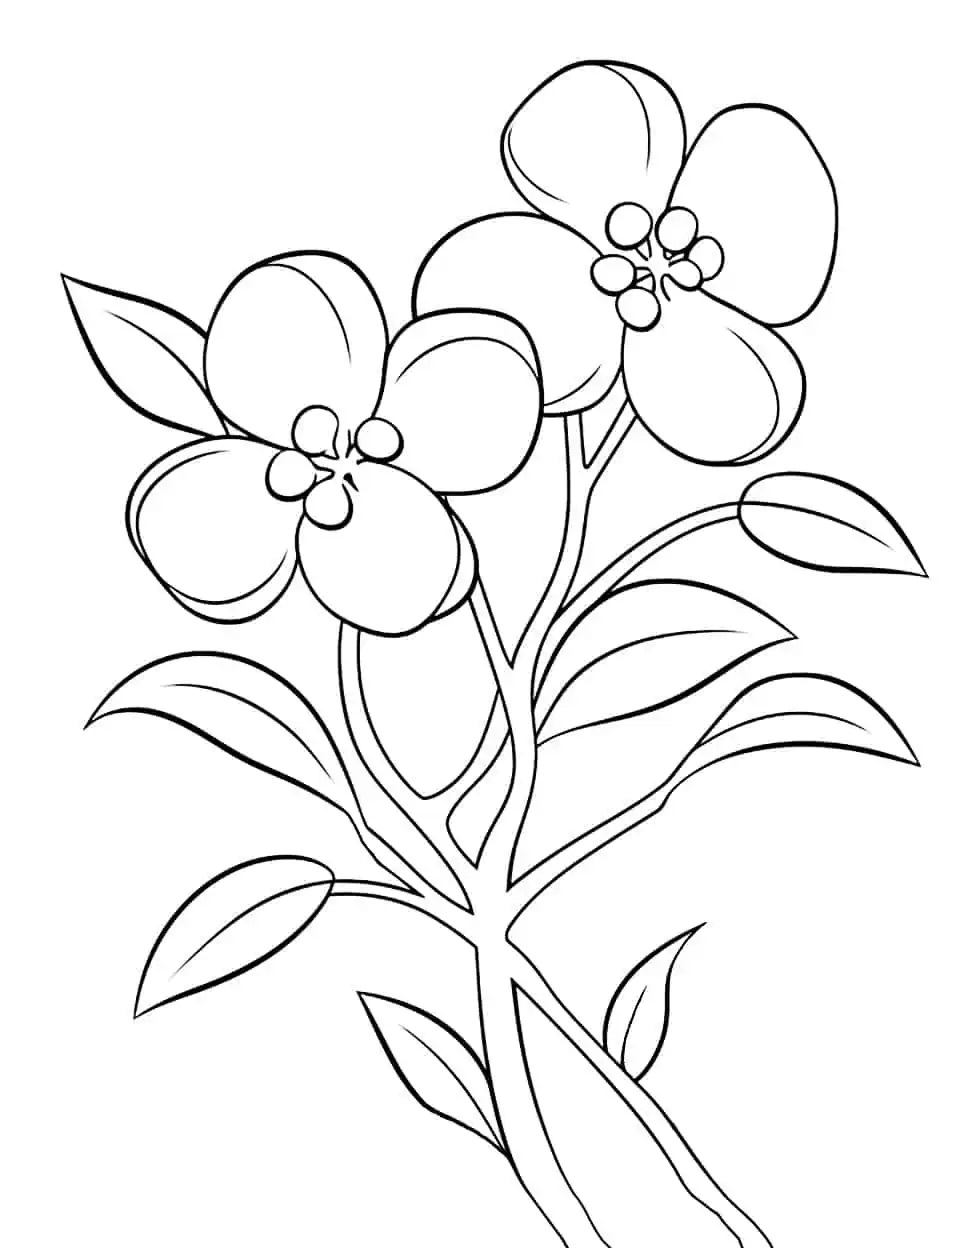 Spring flower preschool coloring page